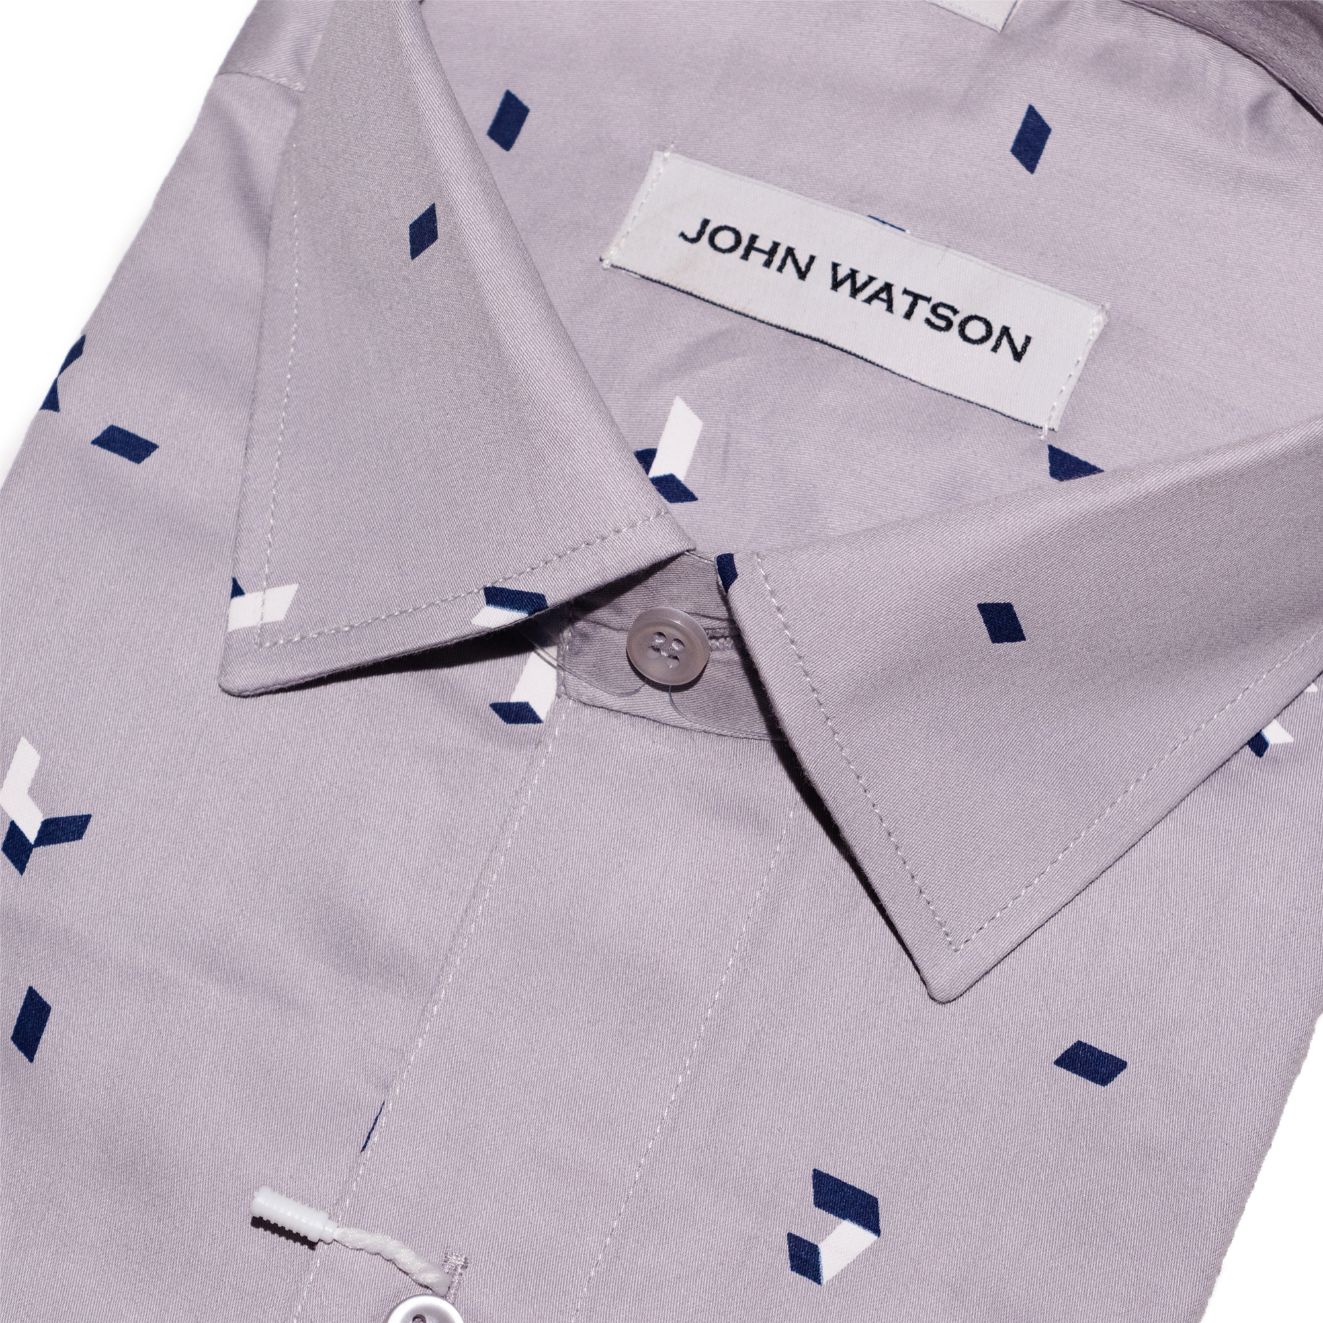 Staple - Printed men's shirt - John Watson